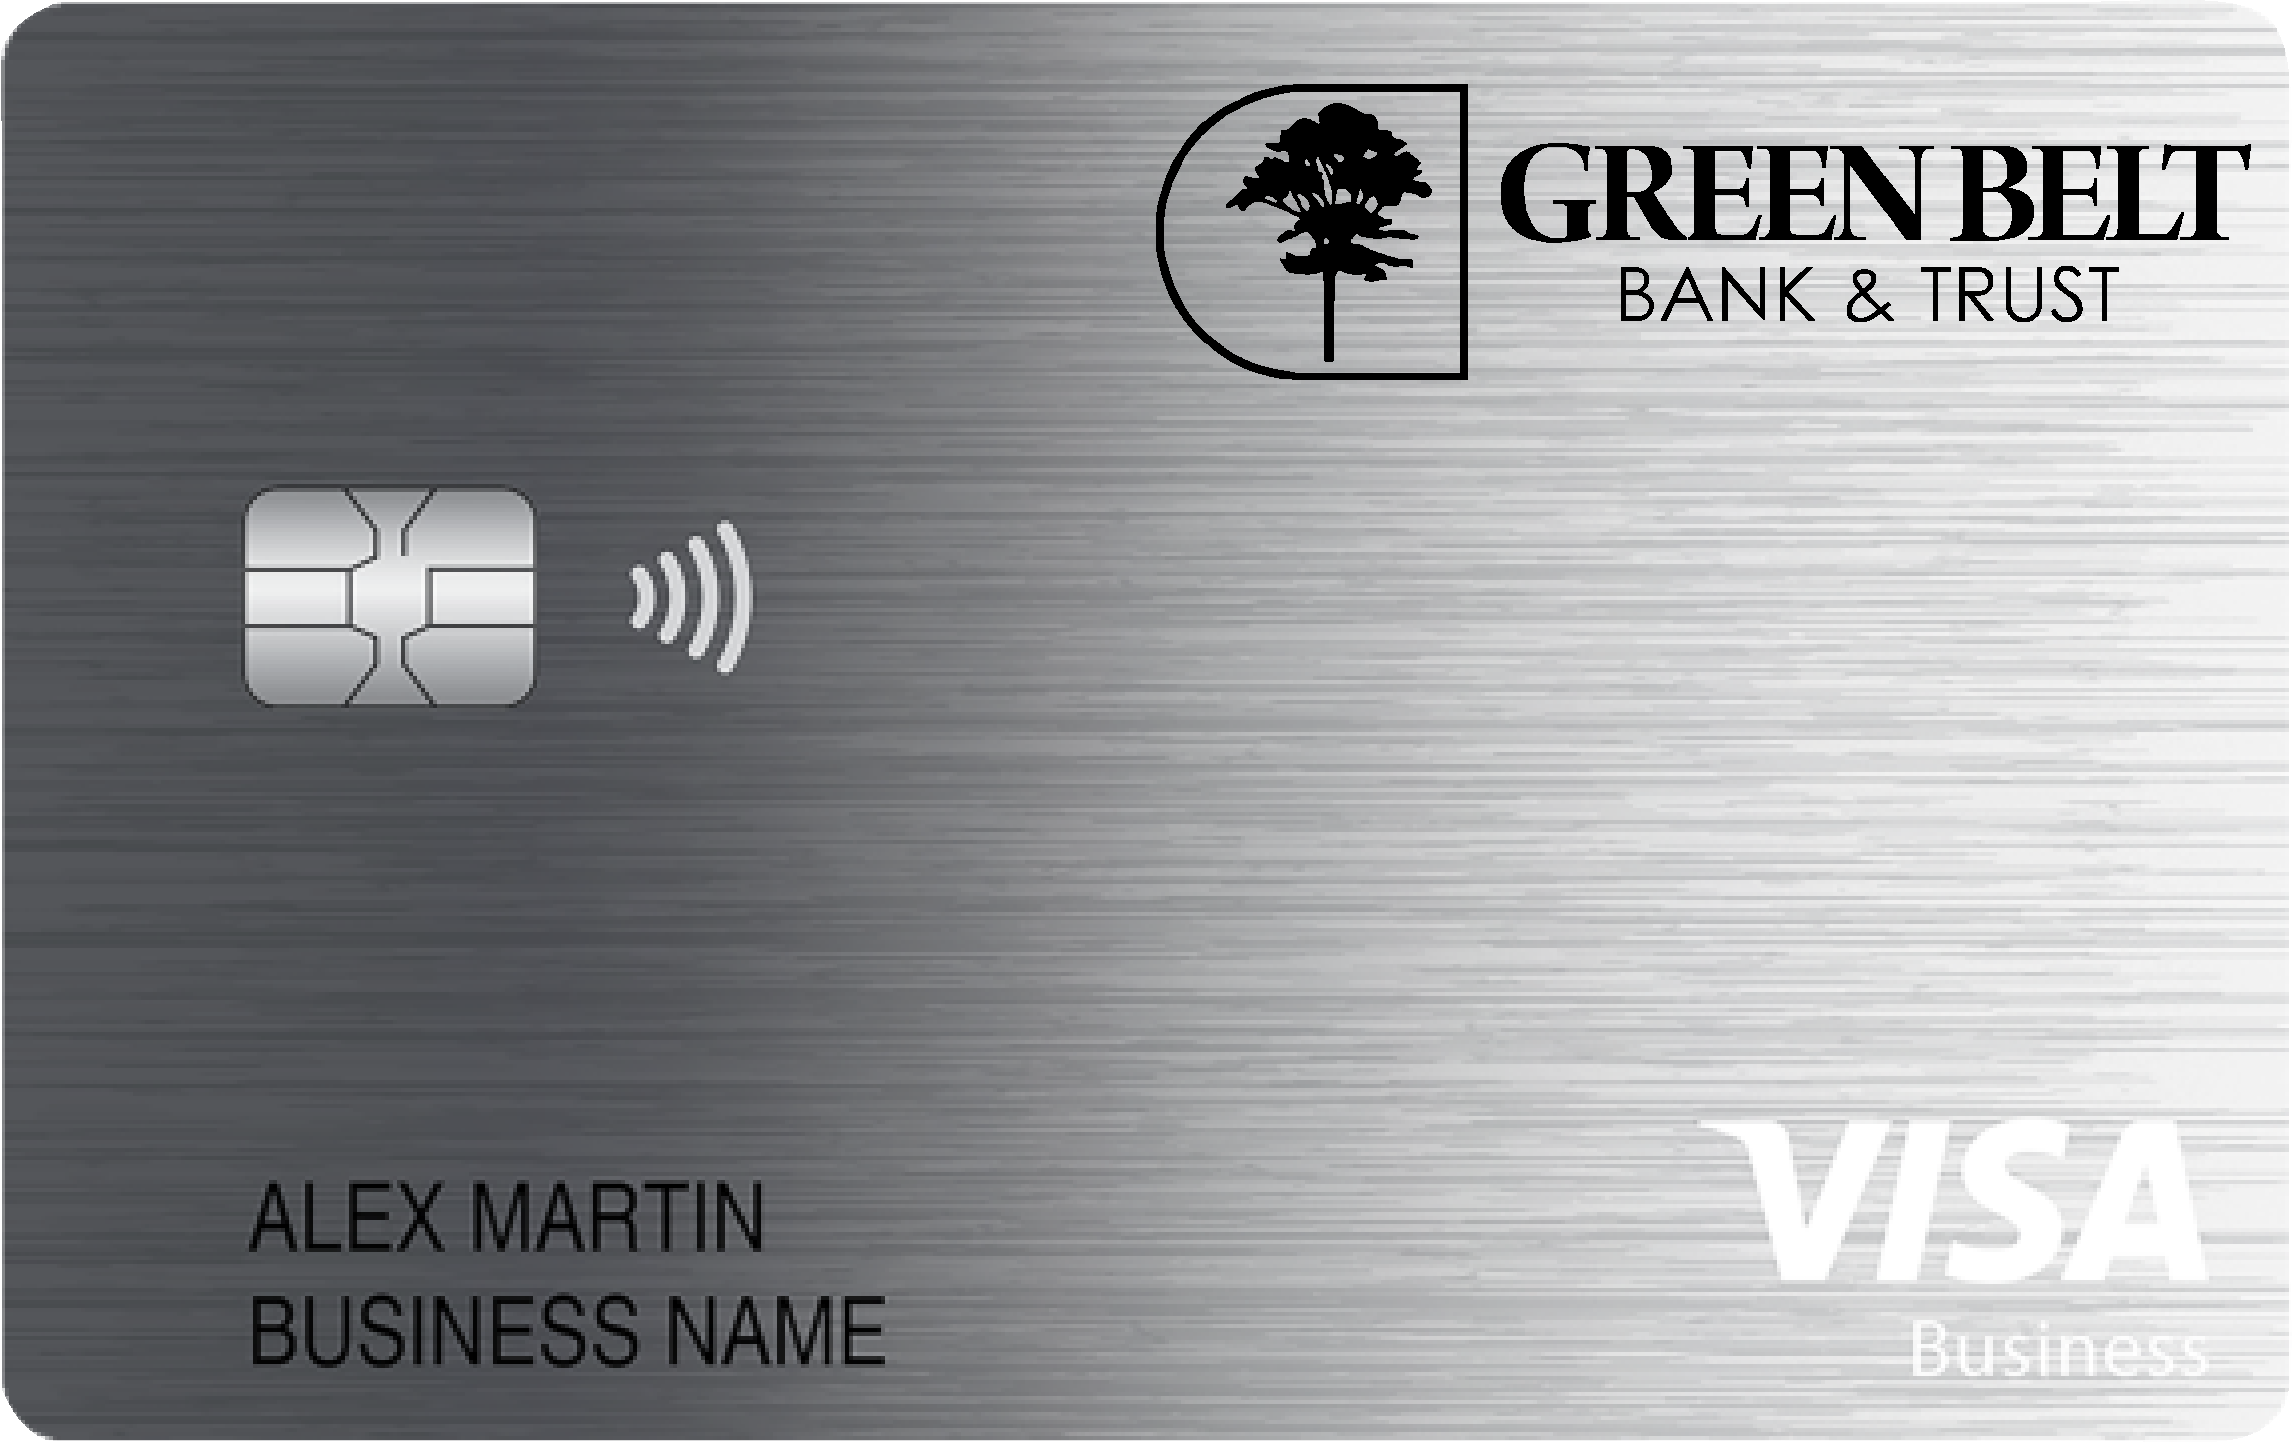 Green Belt Bank & Trust Business Cash Preferred